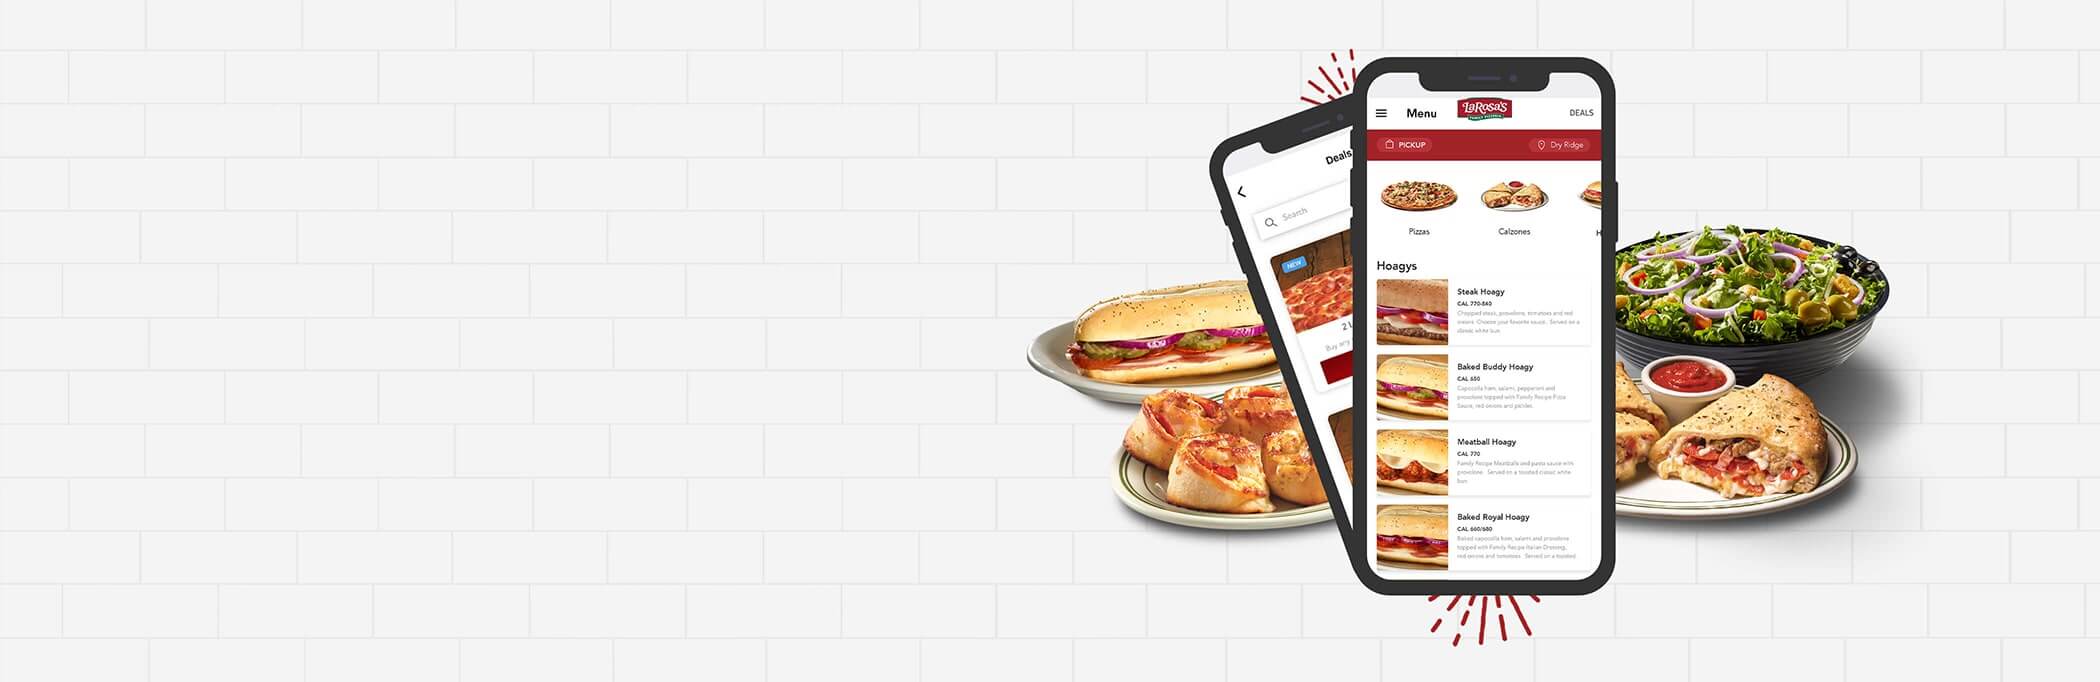 Download an app: Enjoy a free pizza!